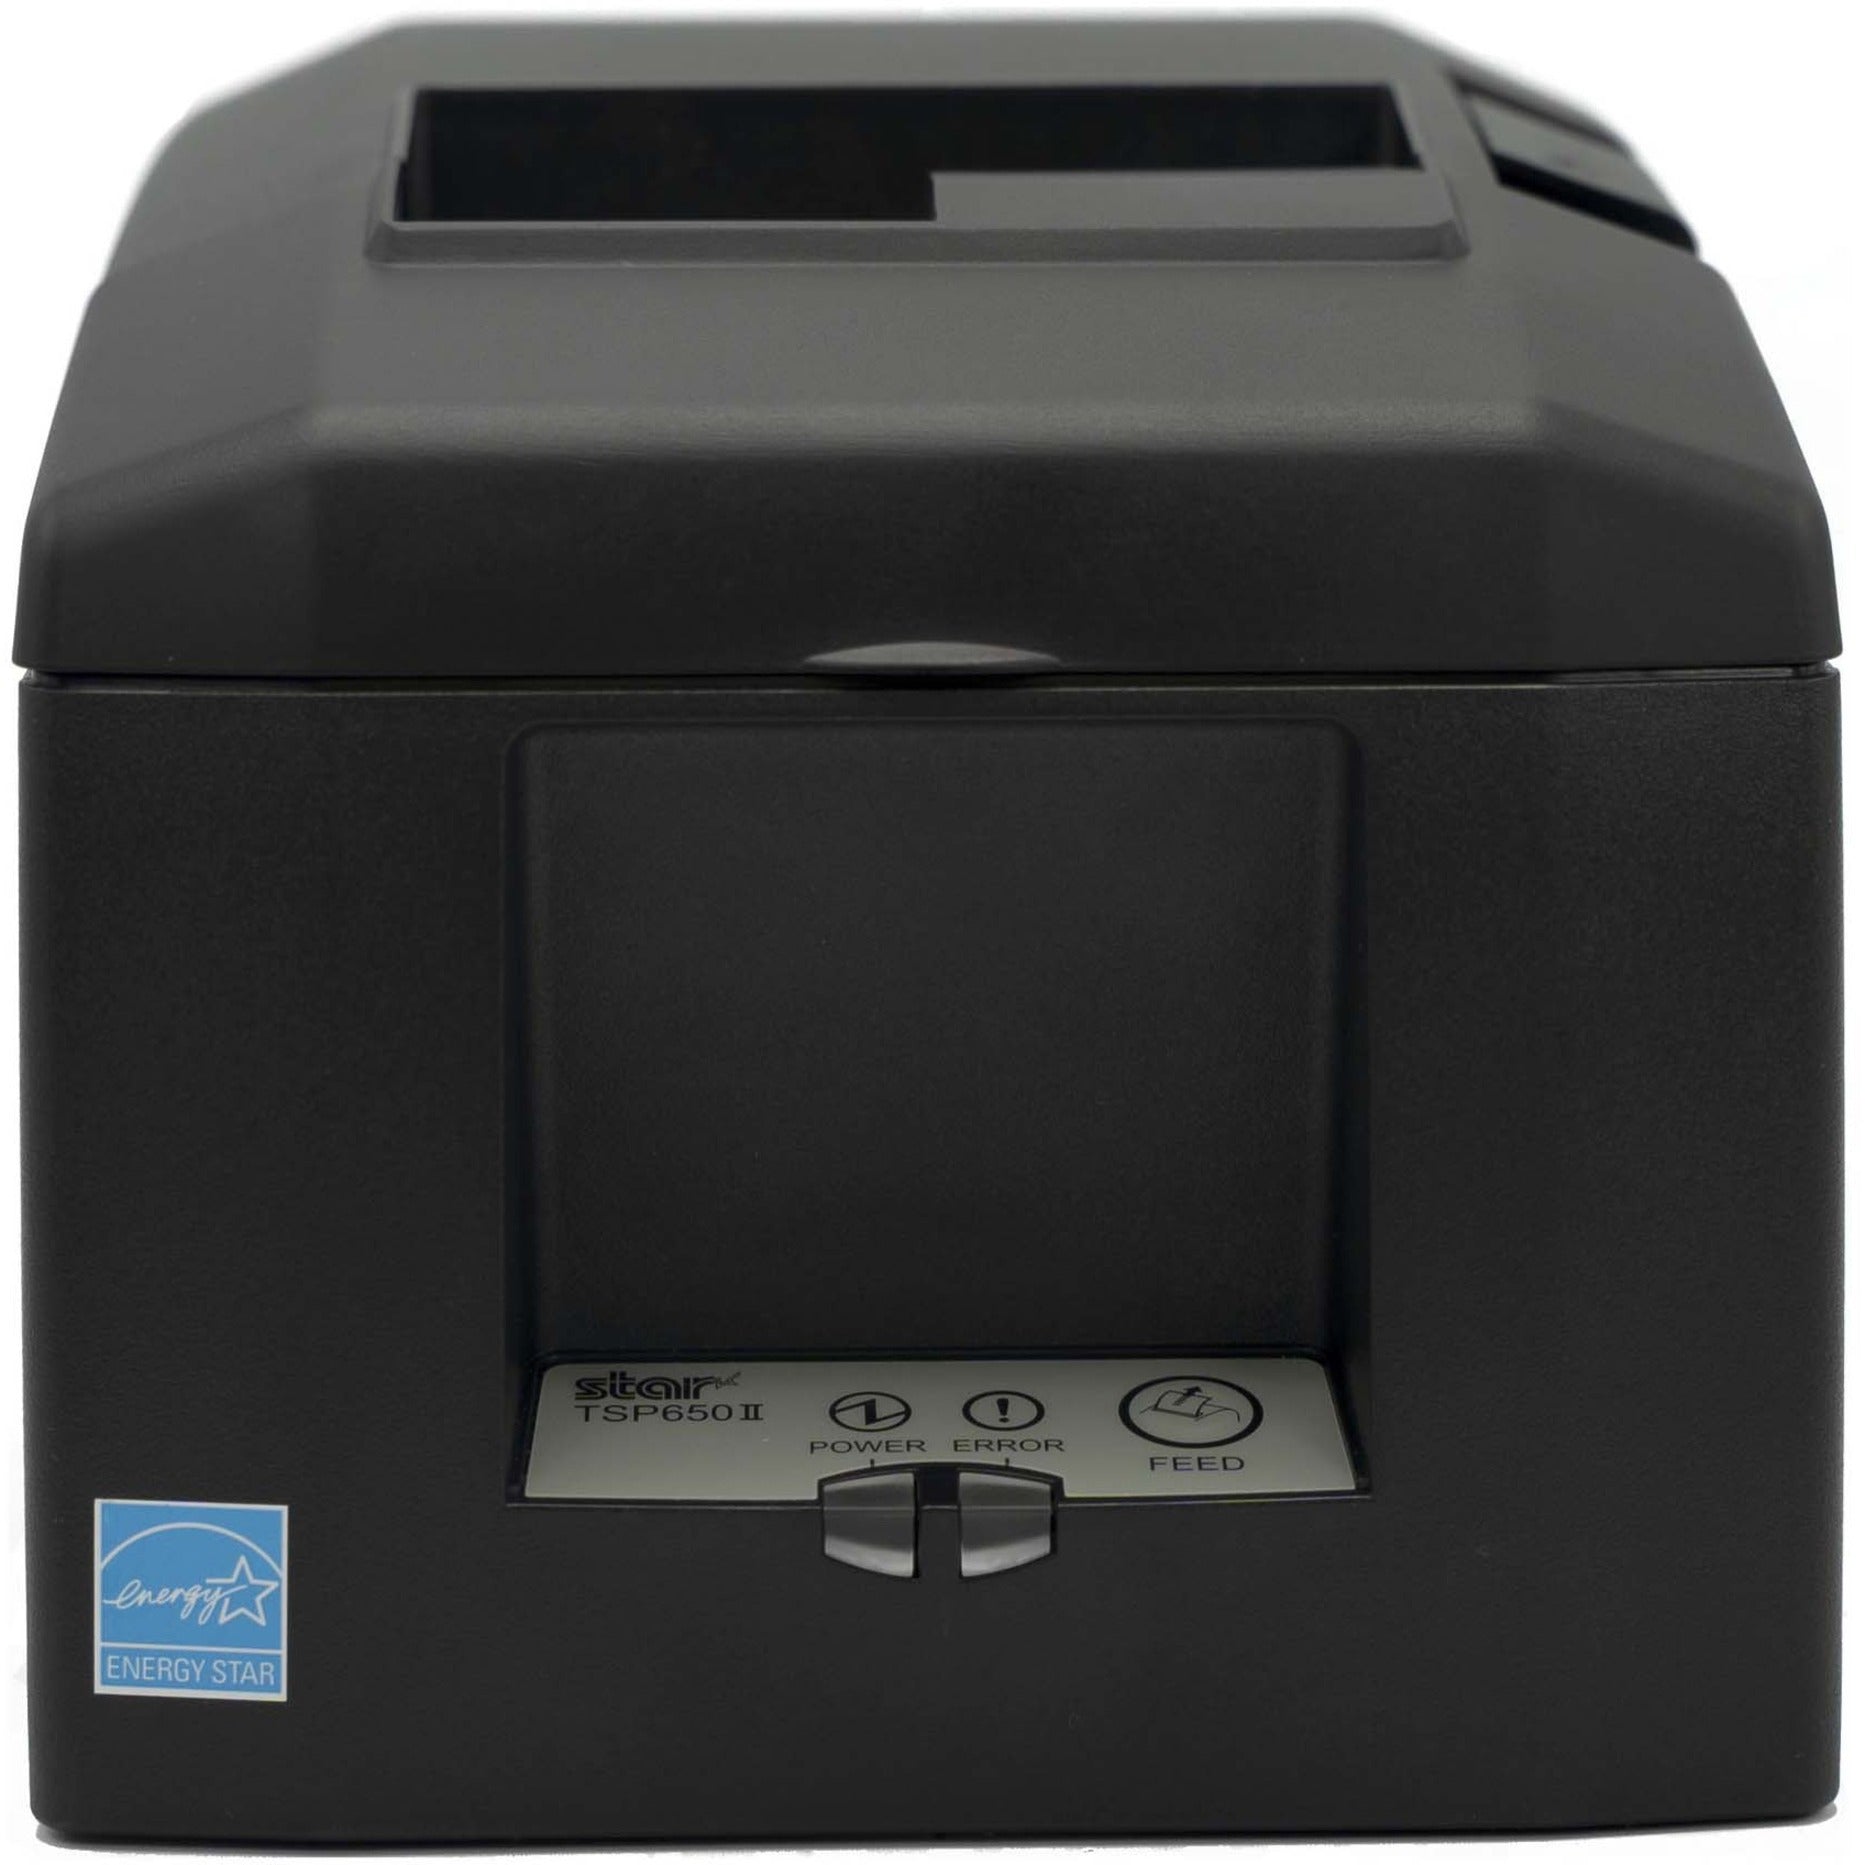 Star Micronics TSP650II Direct Thermal Printer - USB [Discontinued]